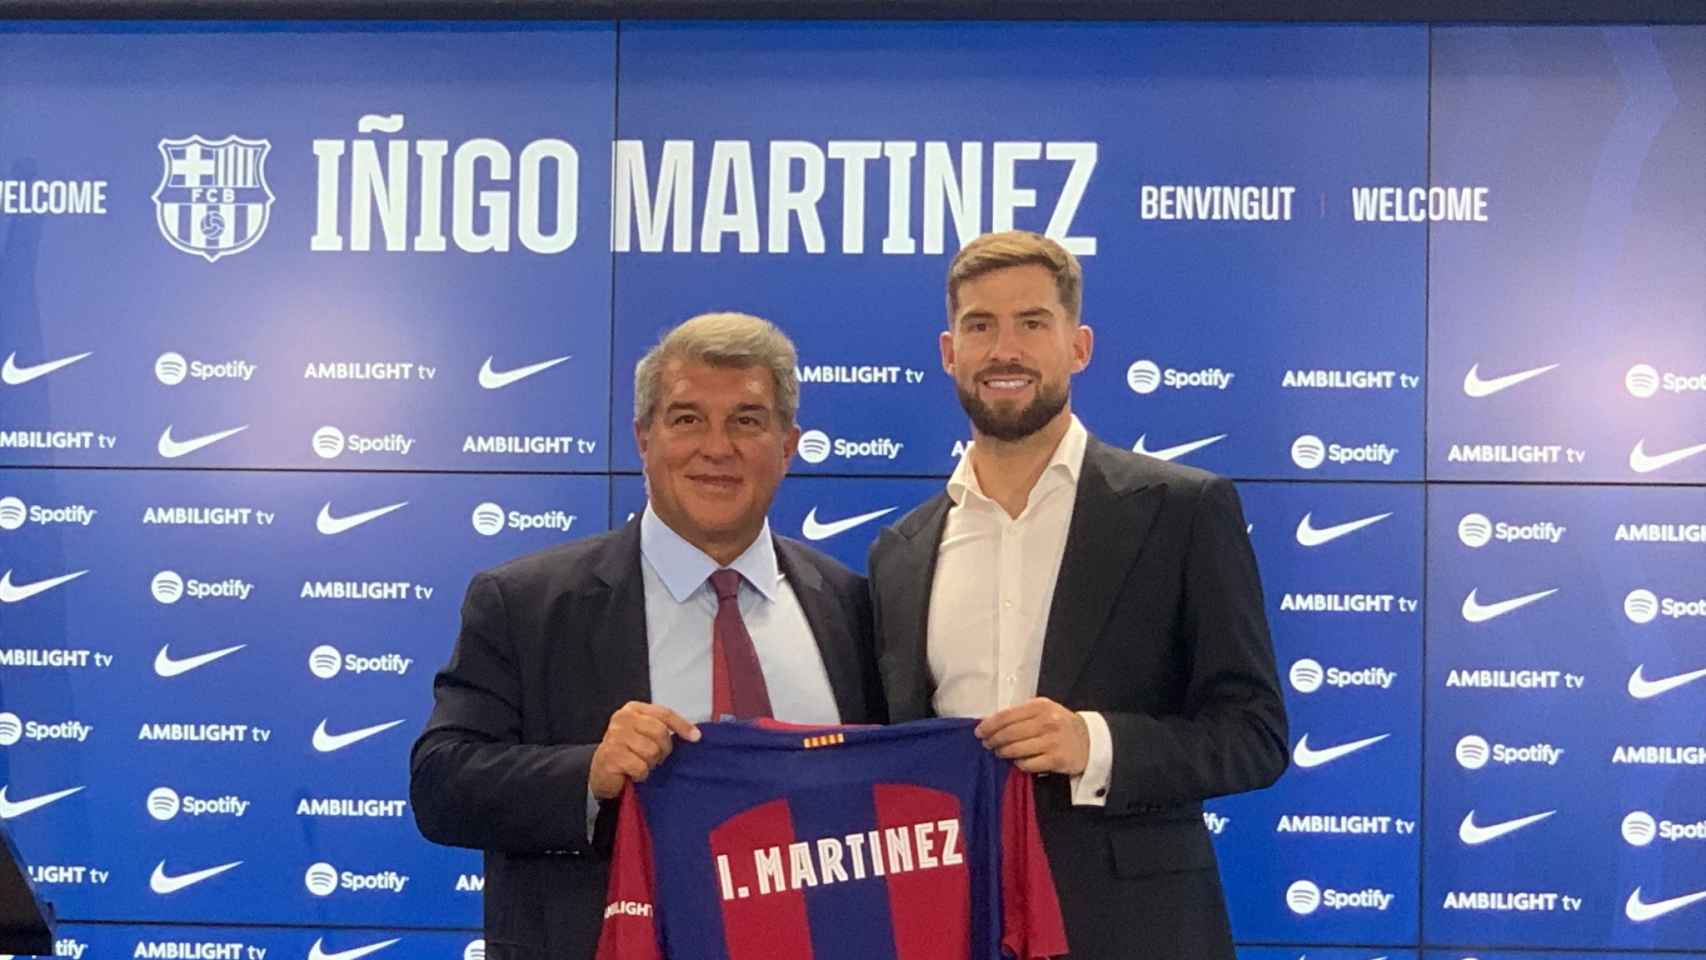 Iñigo Martínez posa como nuevo jugador del Barça junto al presidente Joan Laporta